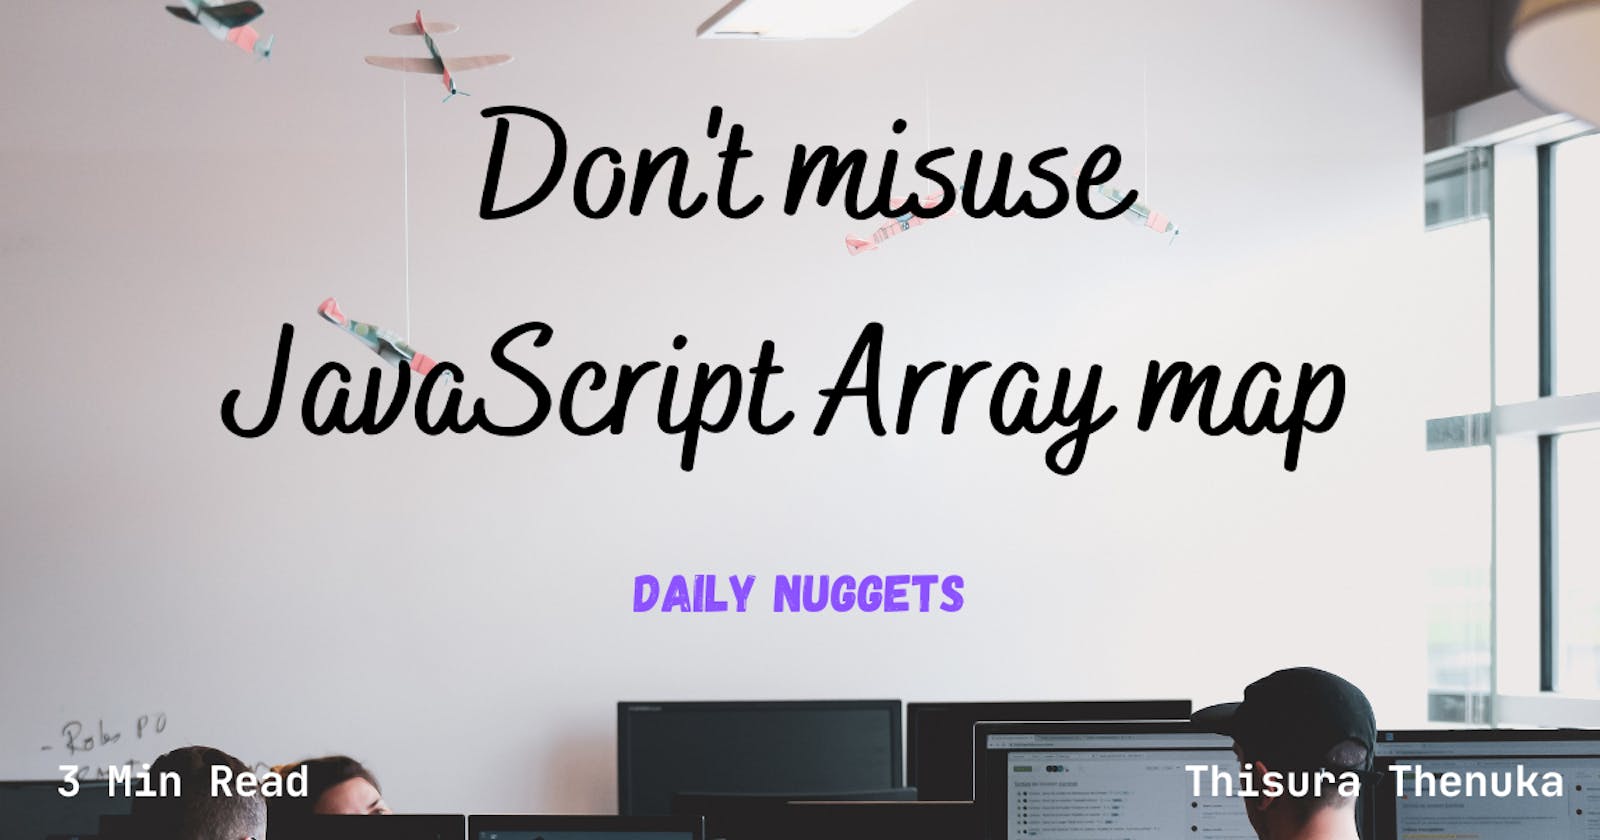 Don't misuse JavaScript Array map